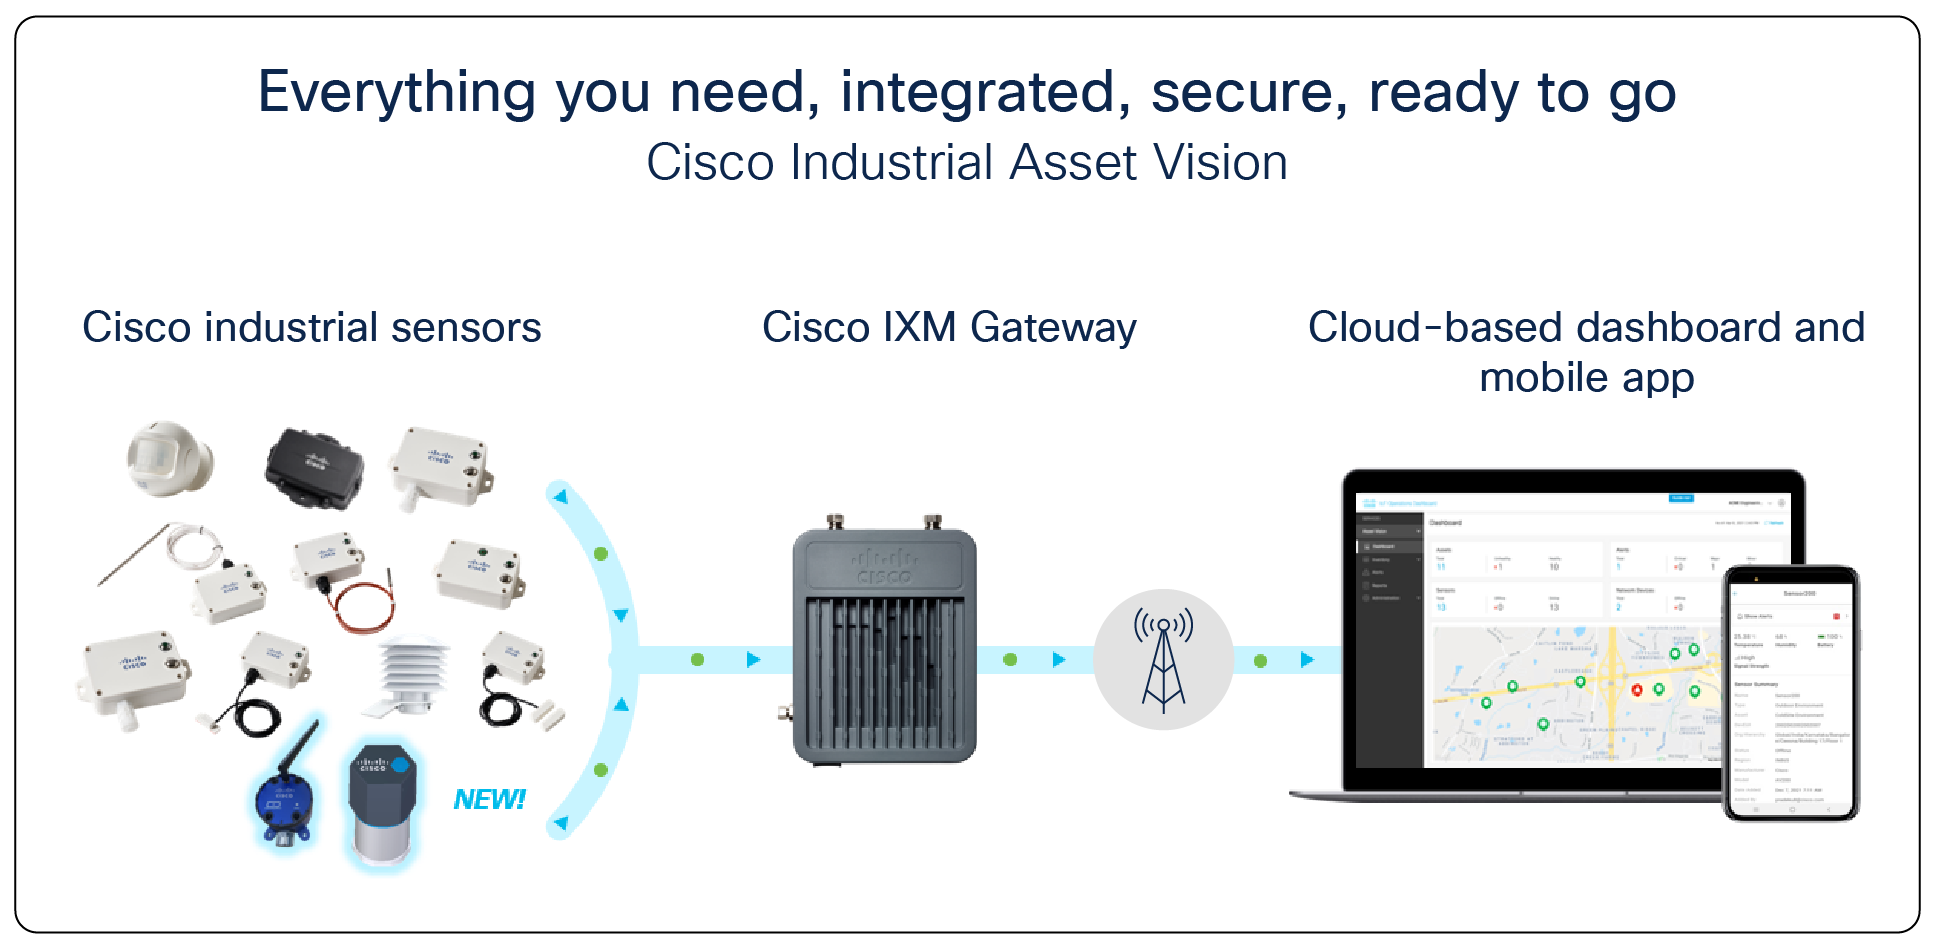 Cisco Industrial Asset Vision components